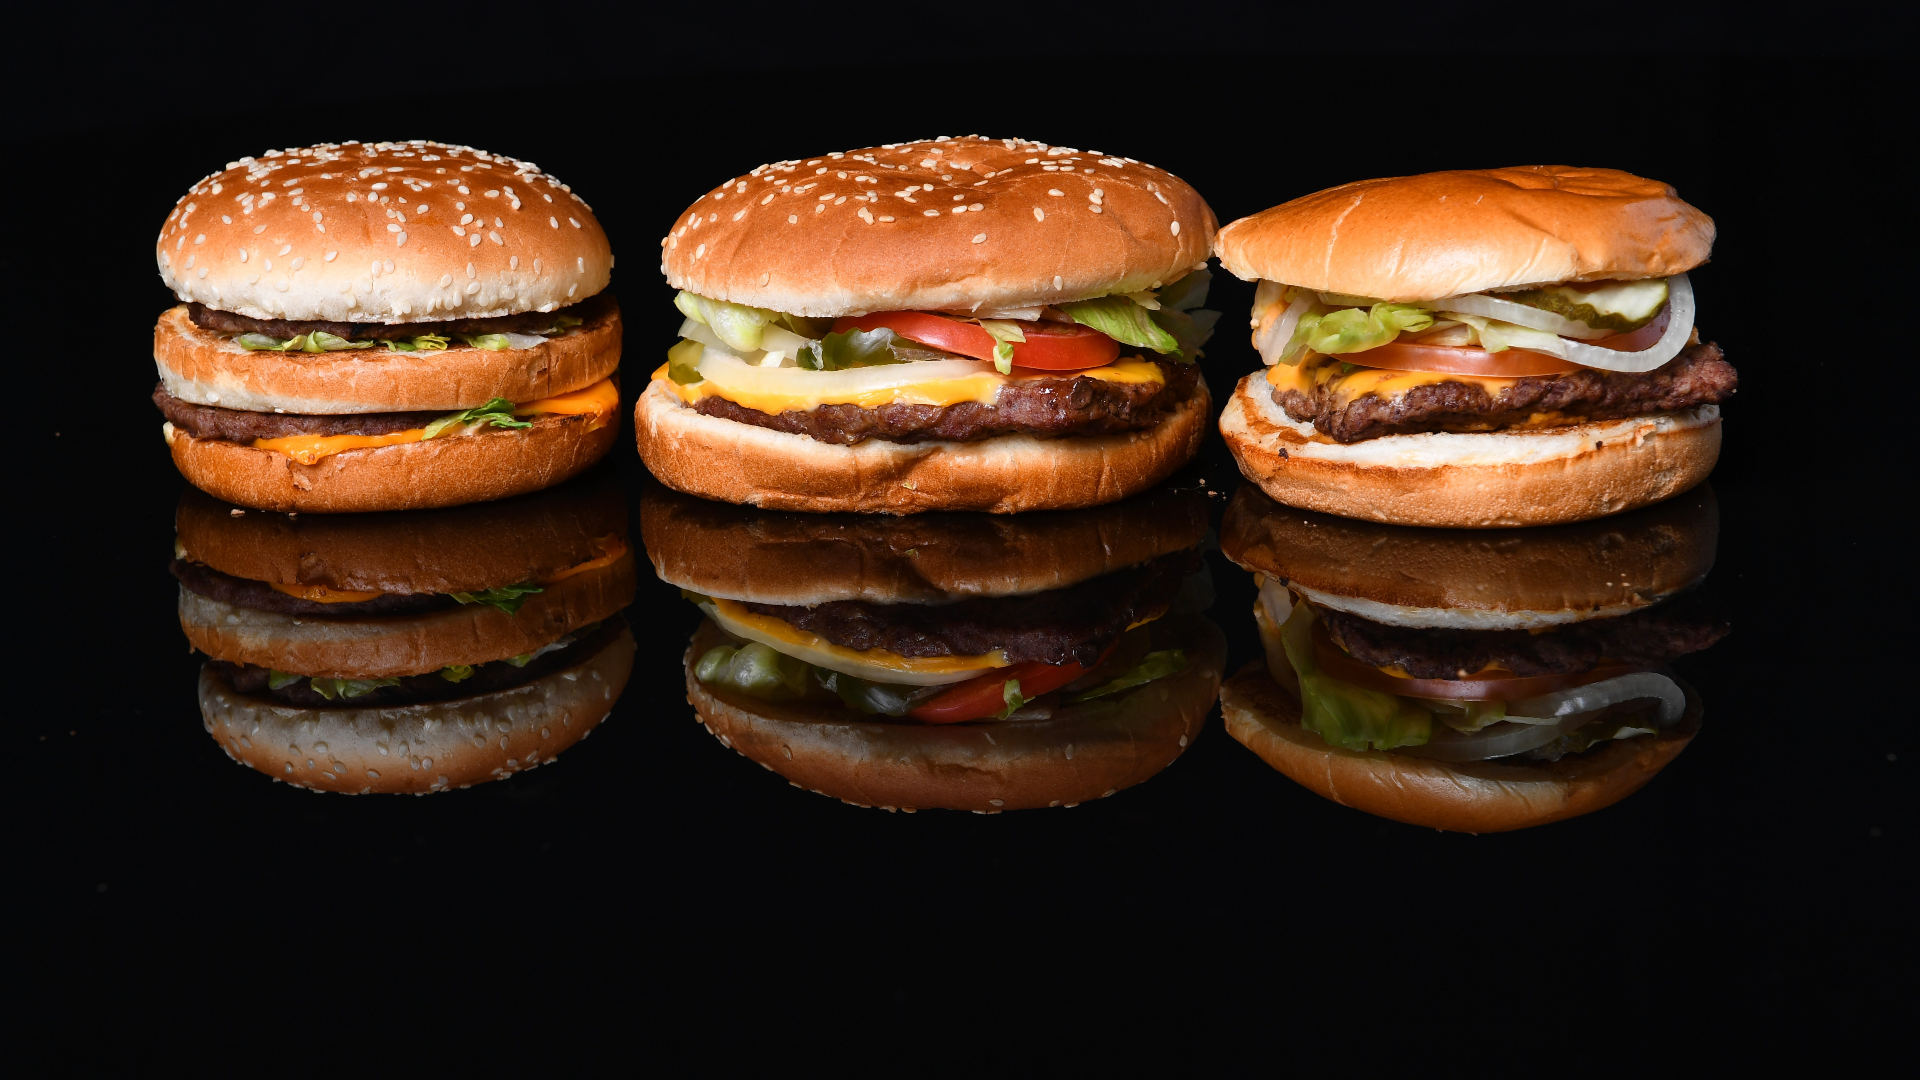 I tried the Big Mac, Whopper and Dave's Single. They share the same major flaw. Washington Post